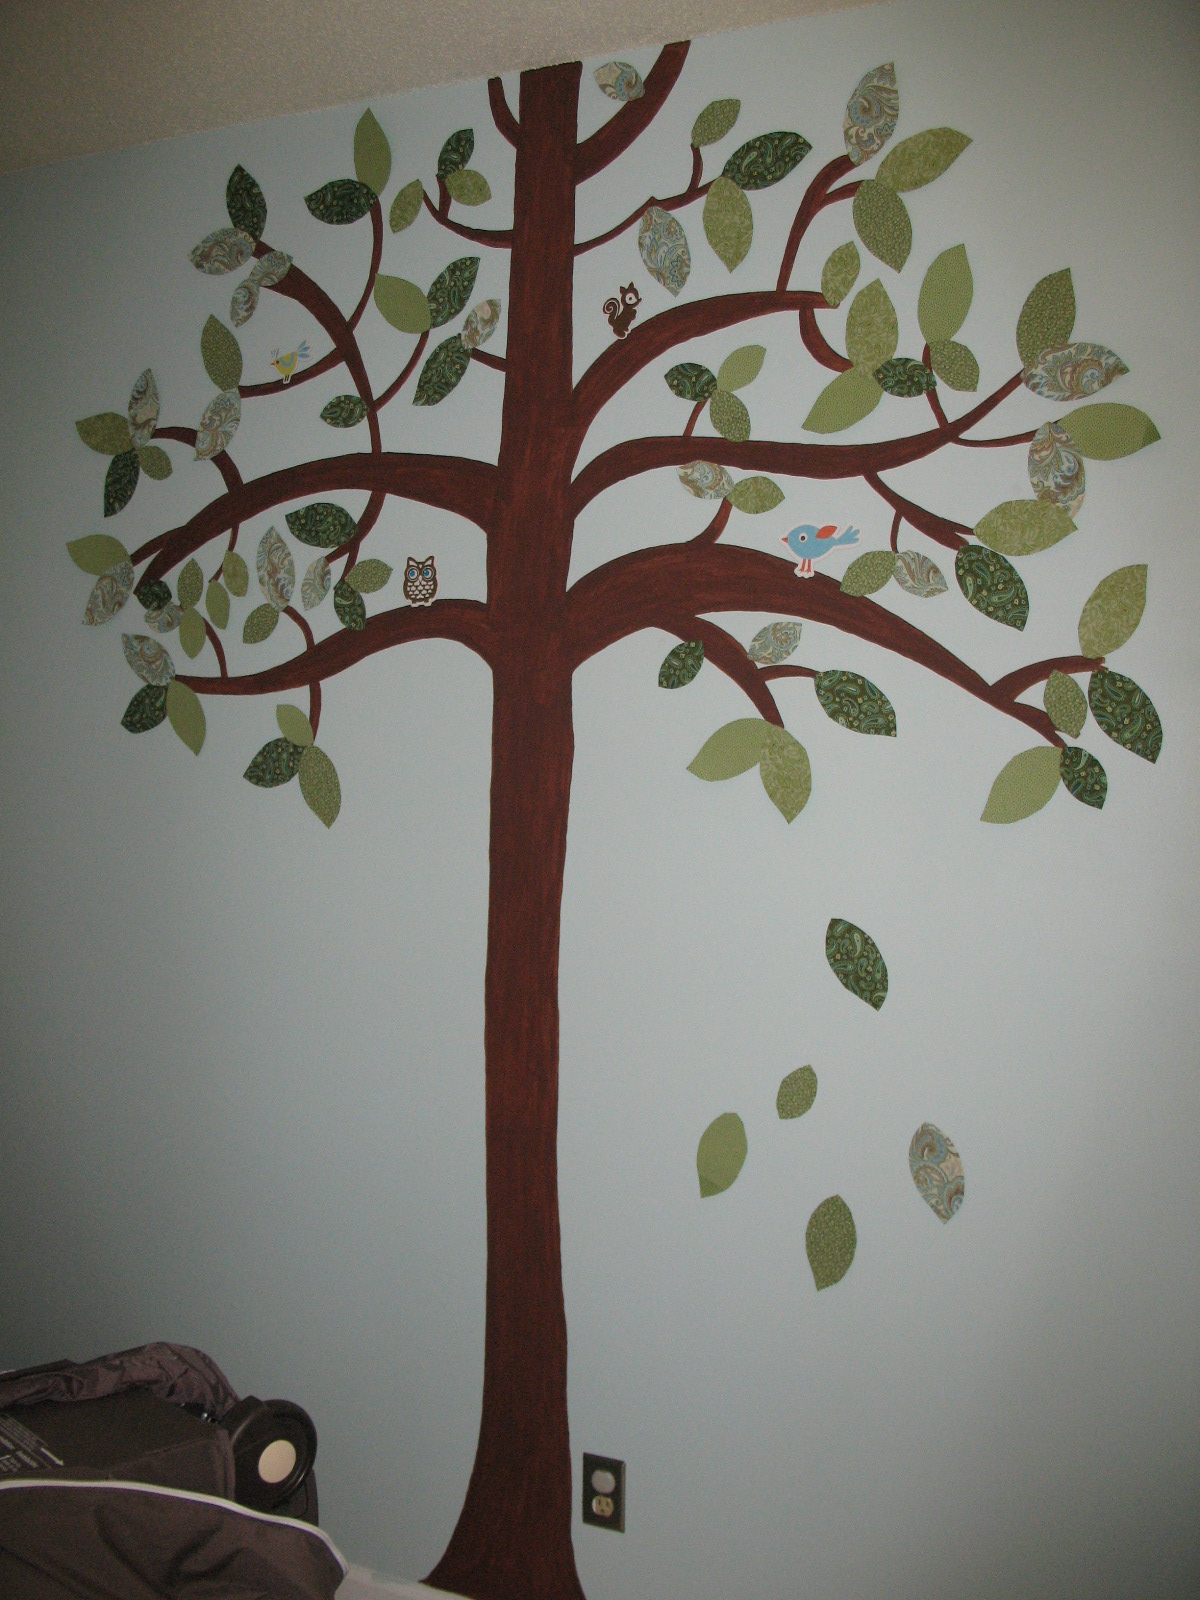 Kane Picz Tree Wallpaper Mural